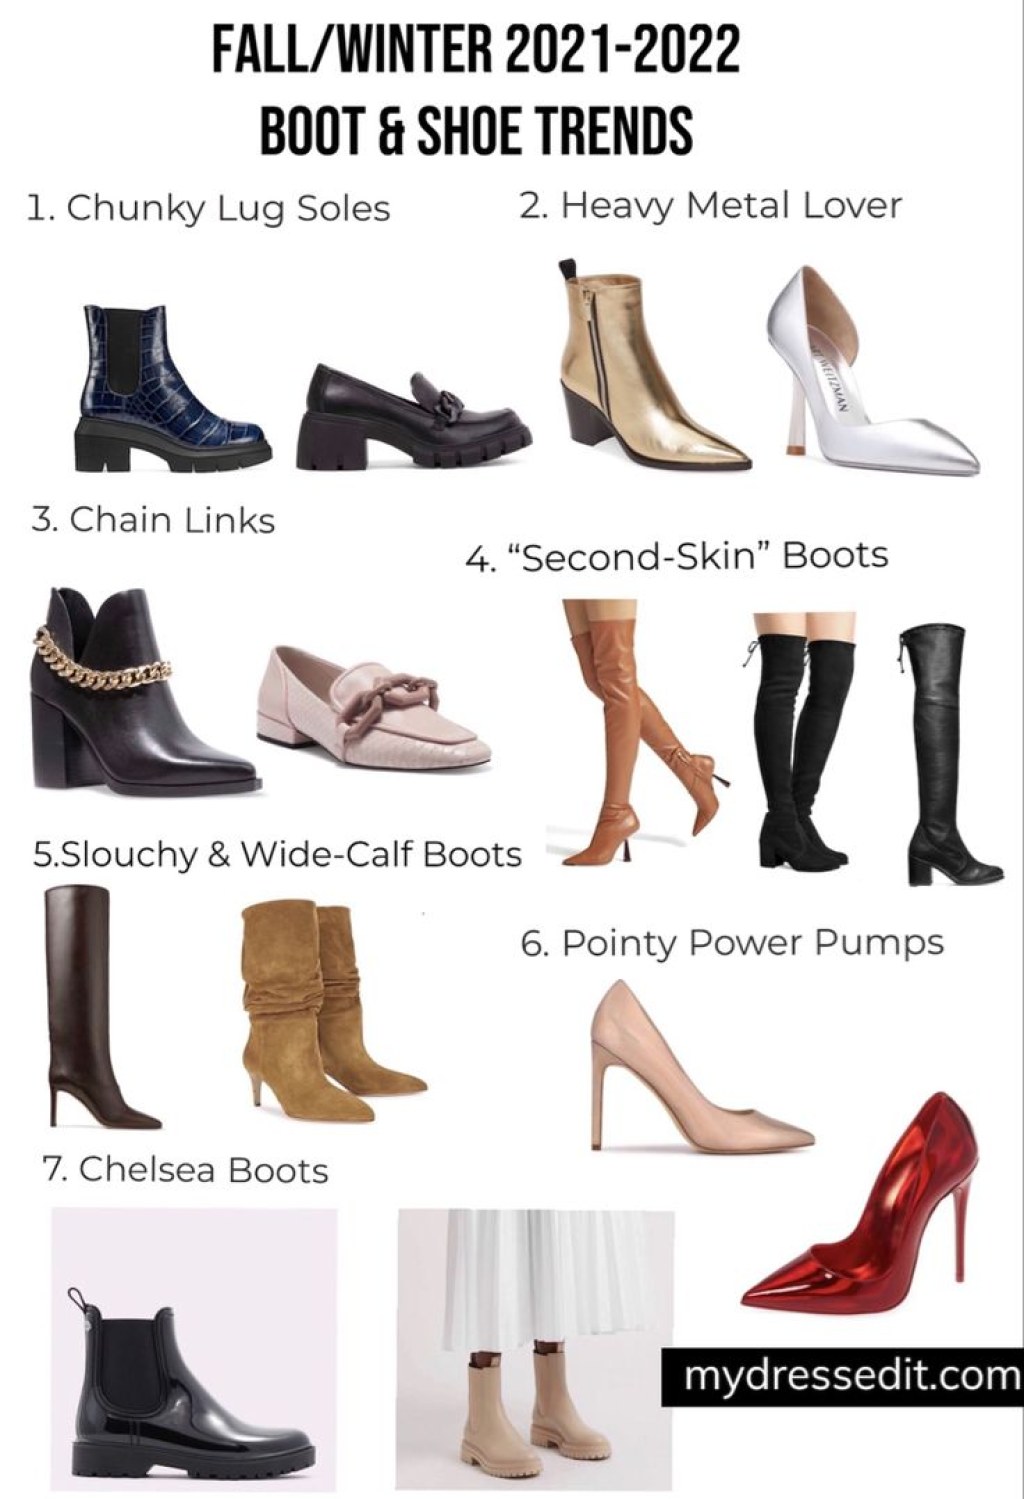 boots fashion autumn 2022 - Fall/Winter - Wearable Boot & Shoe Trends  Fashion